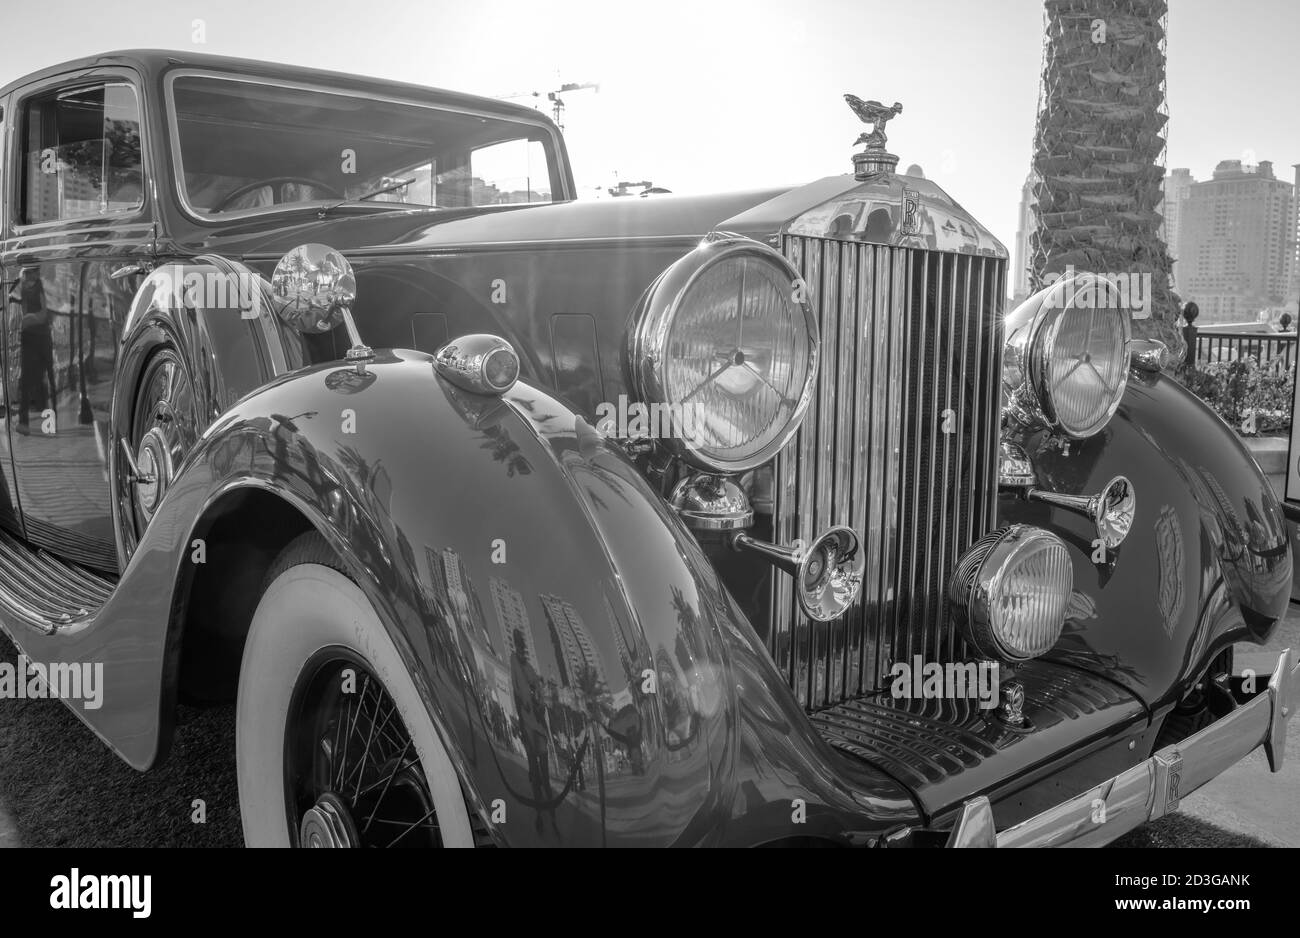 Doha,Qatar- 30 March 2020: 1936 Rolls royce phantom iii classic car Stock Photo